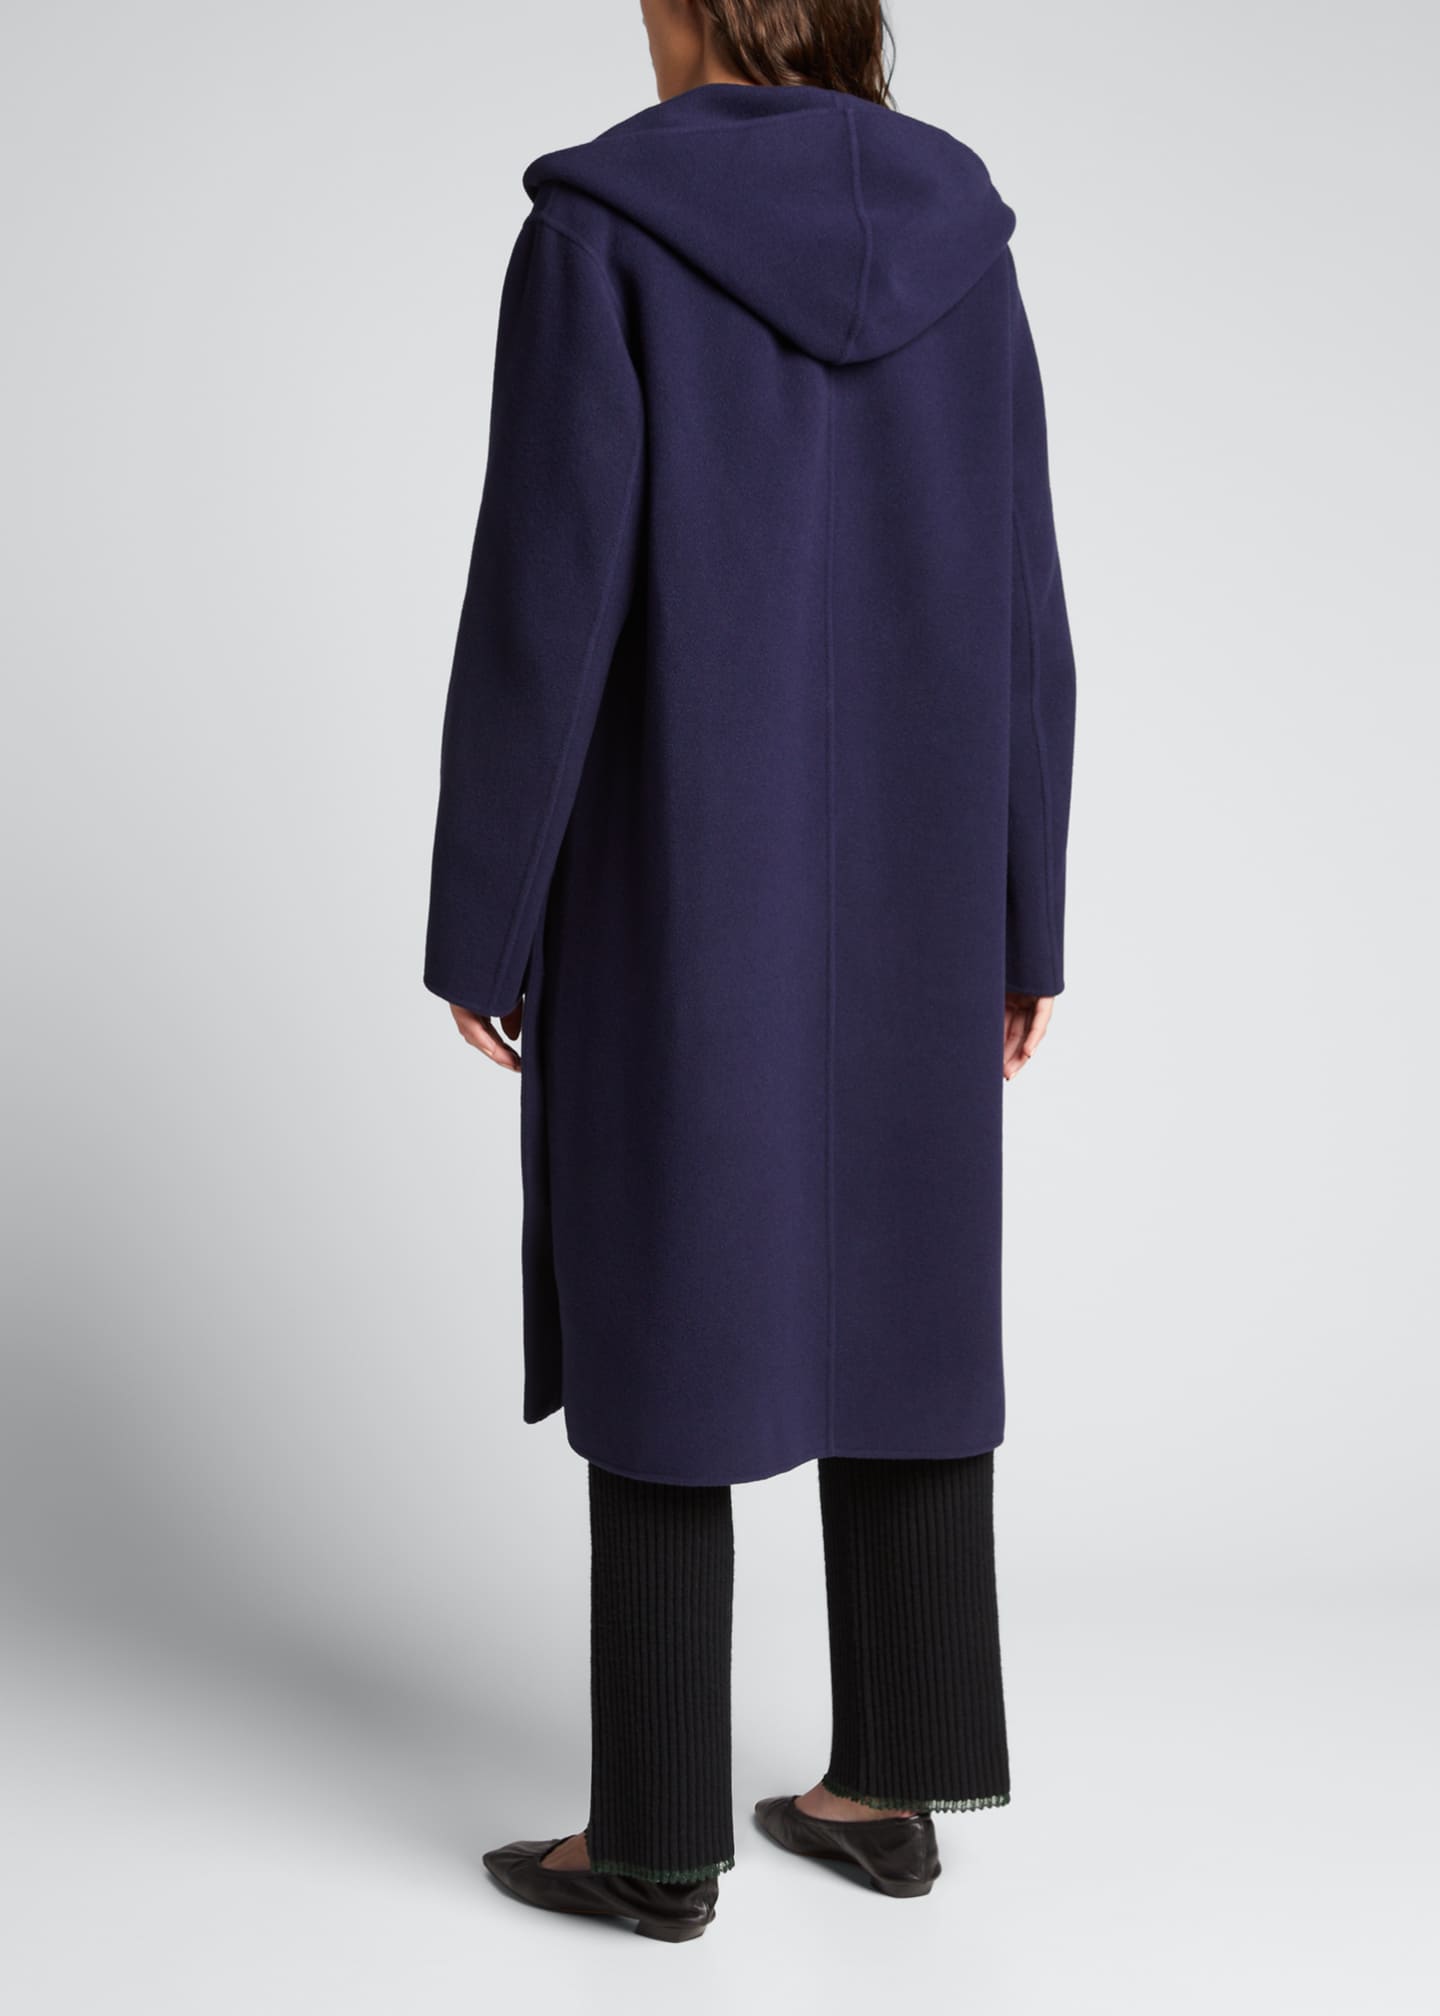 Proenza Schouler White Label Hooded Double-Face Wool Coat - Bergdorf ...